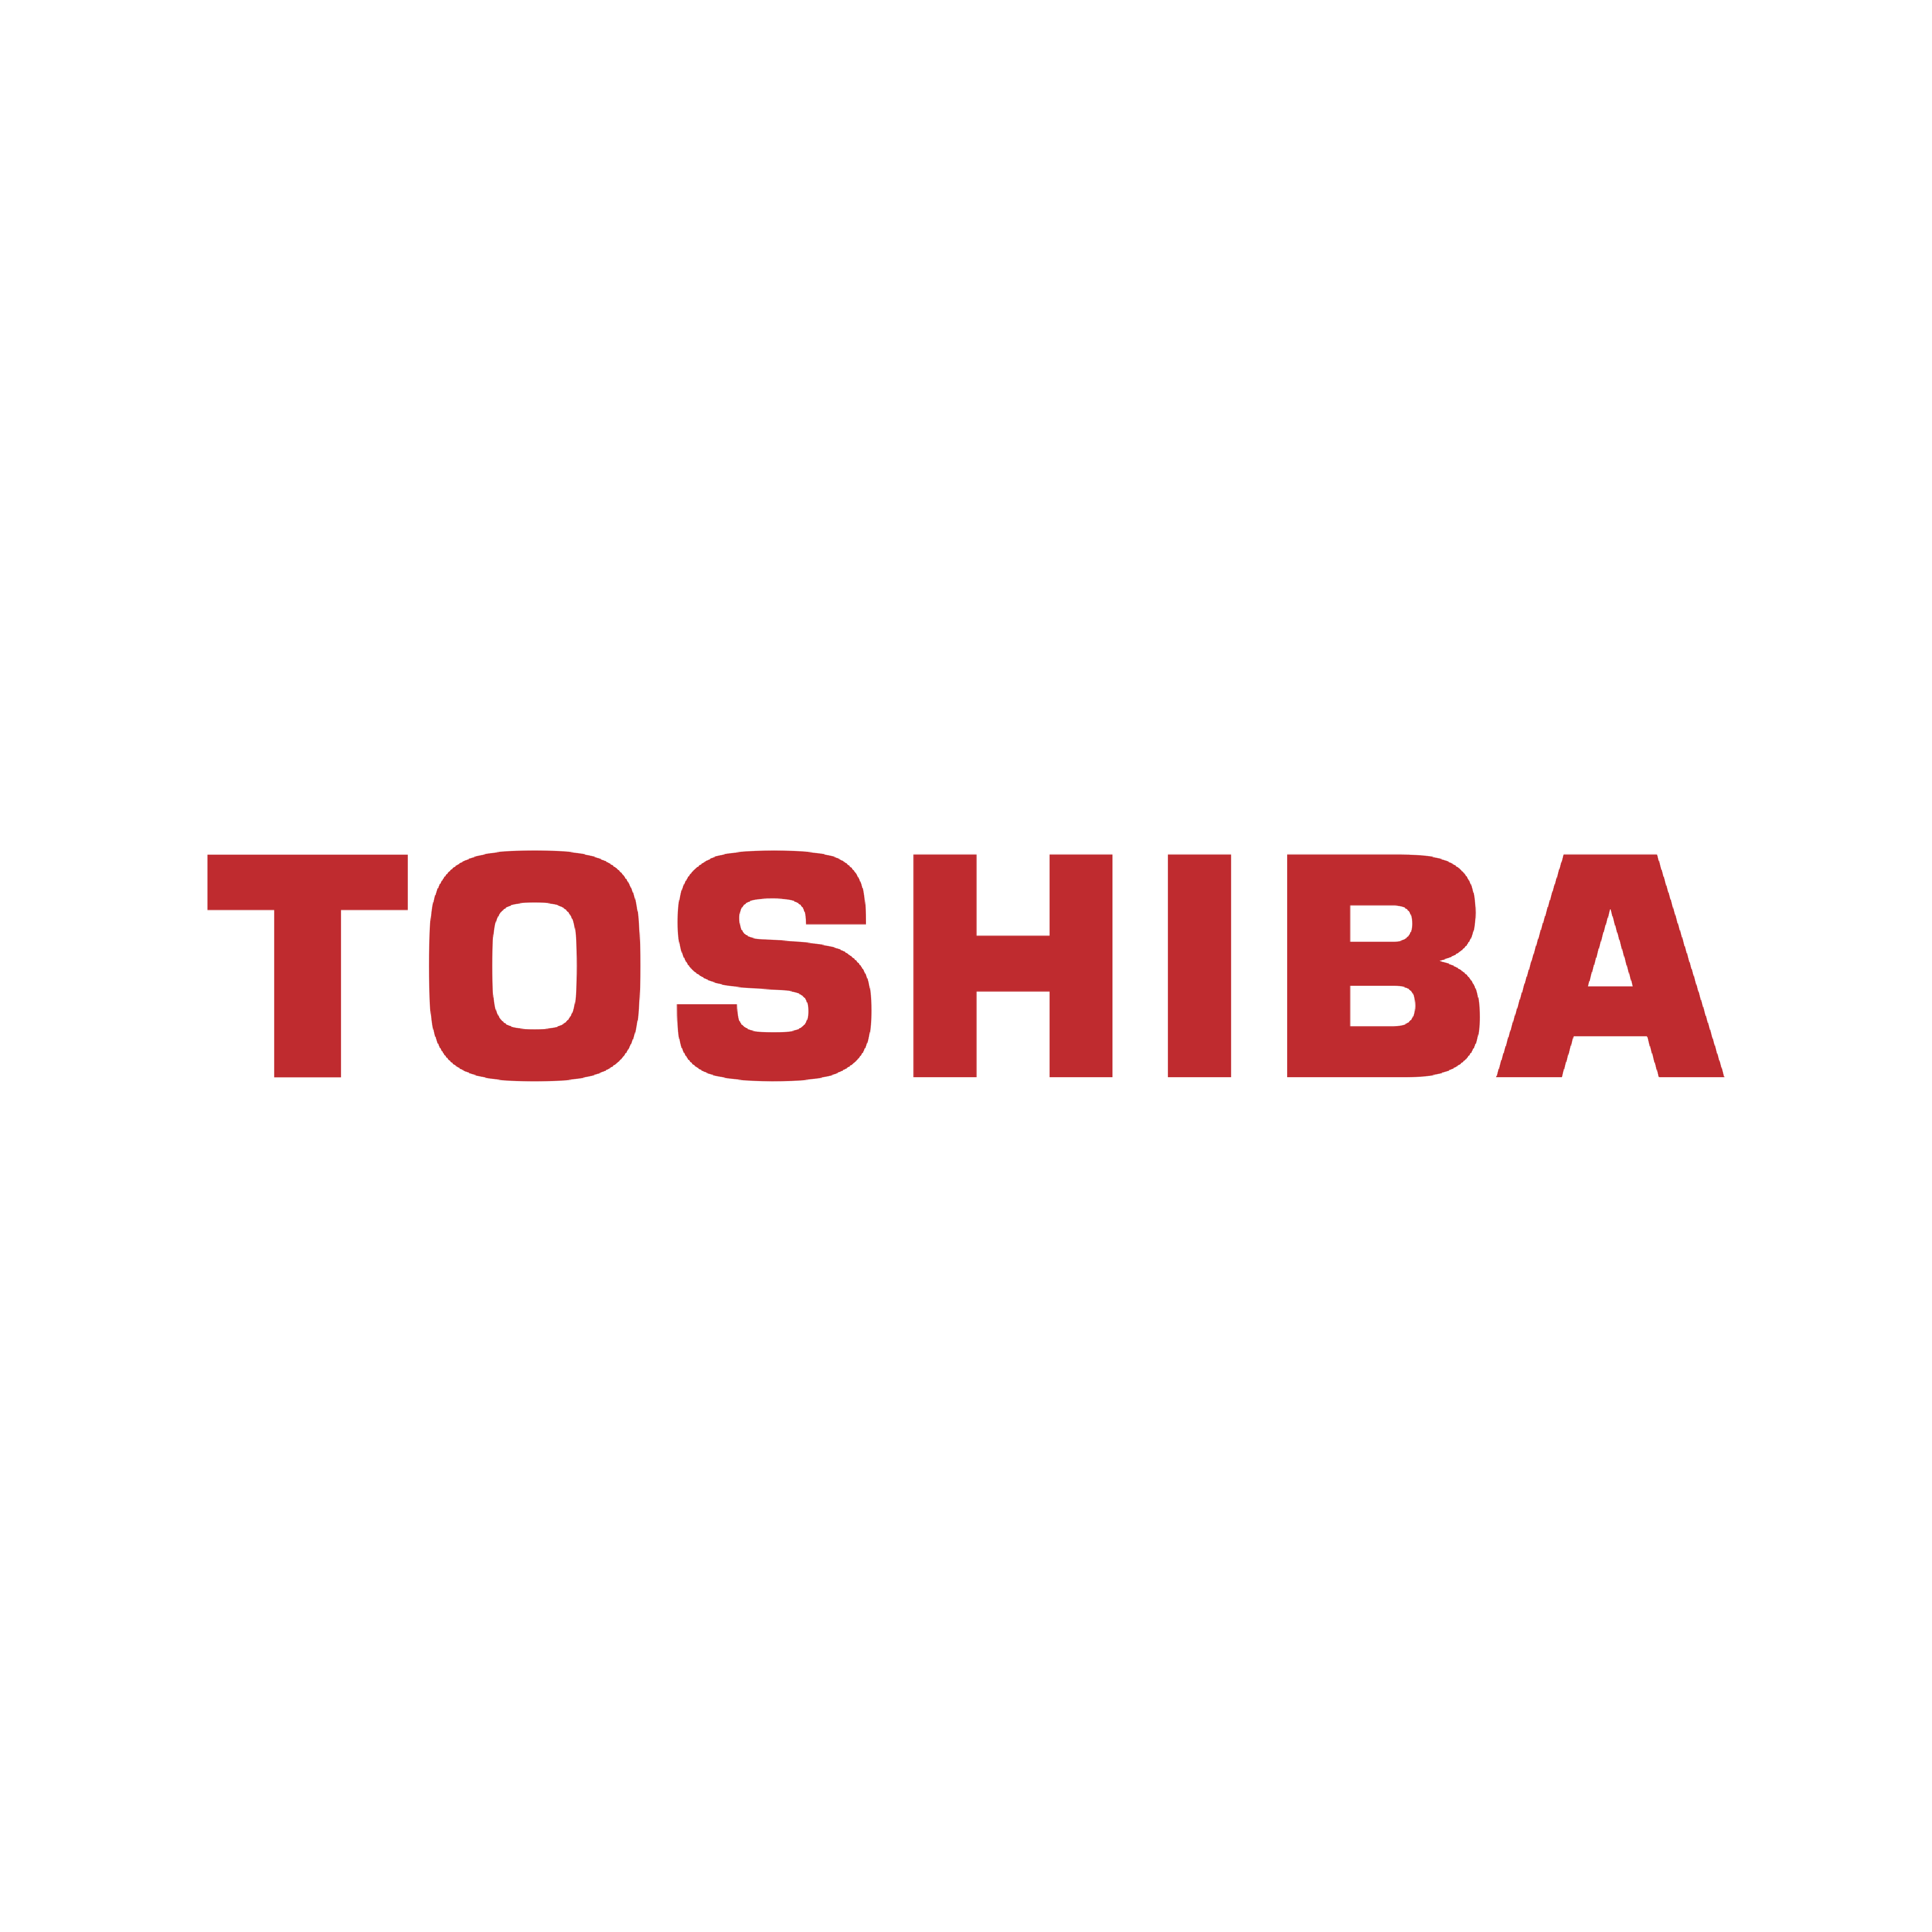 toshiba (square)